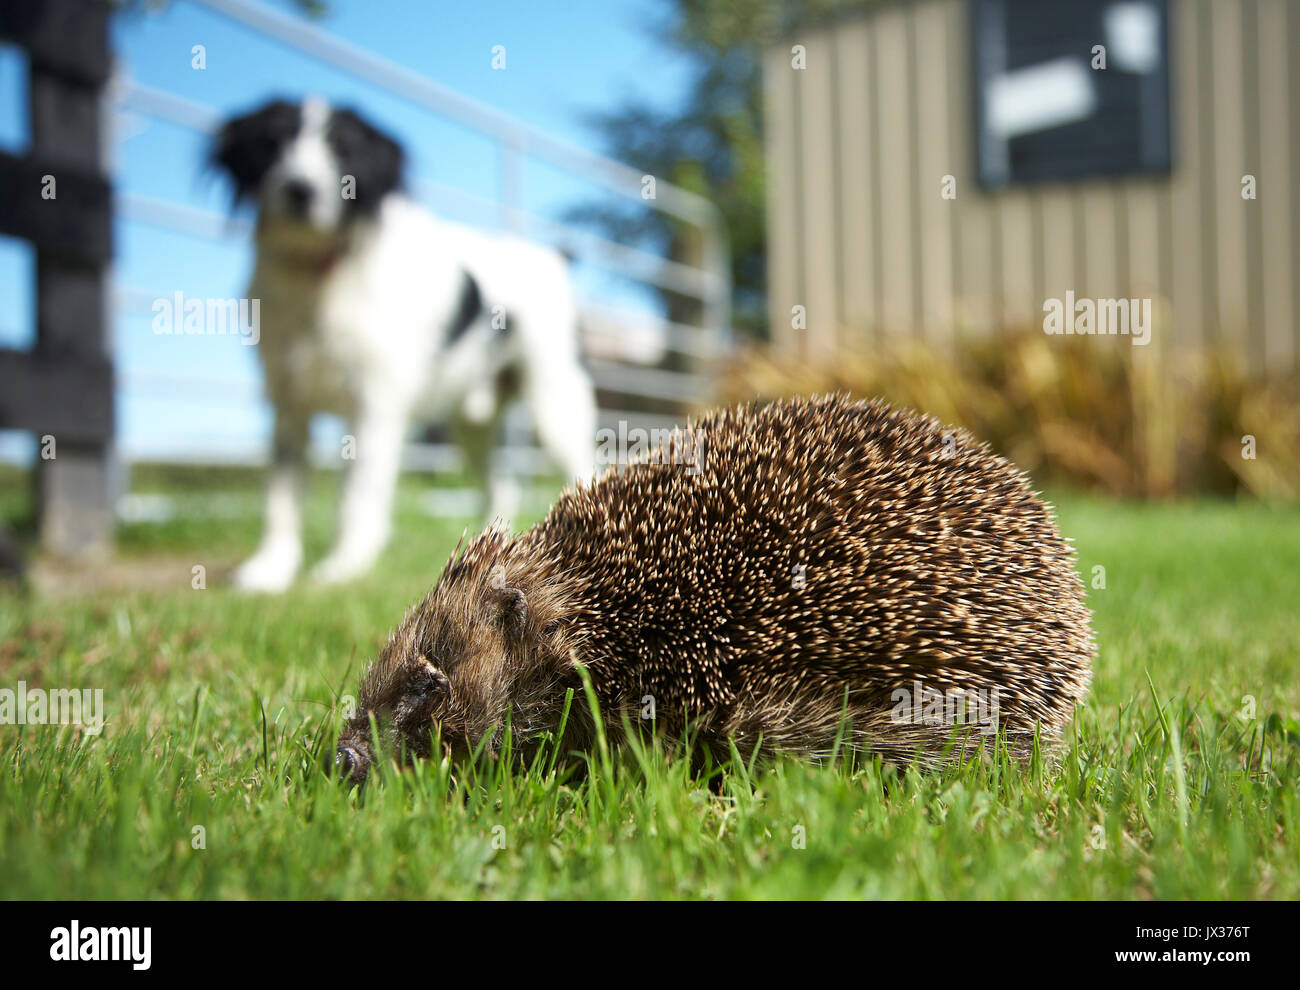 European hedgehog pest roaming garden Stock Photo